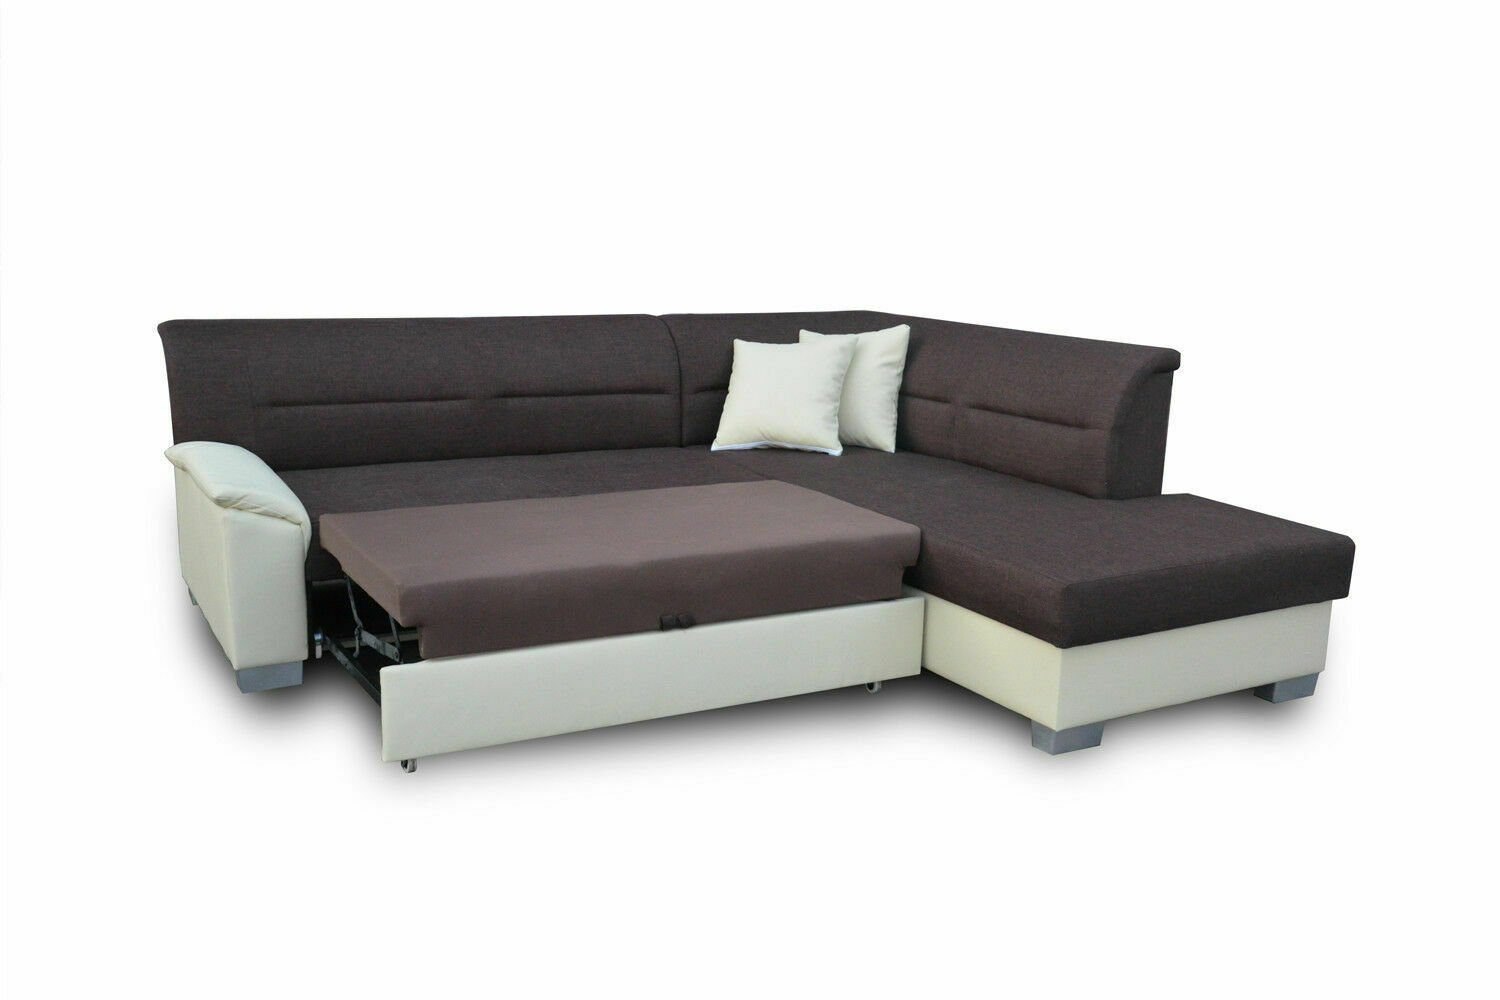 JVmoebel Ecksofa Design Sofa Ecksofa Schlafsofa Bettfunktion Couch Polster Textil, Mit Bettfunktion Braun/Weiß